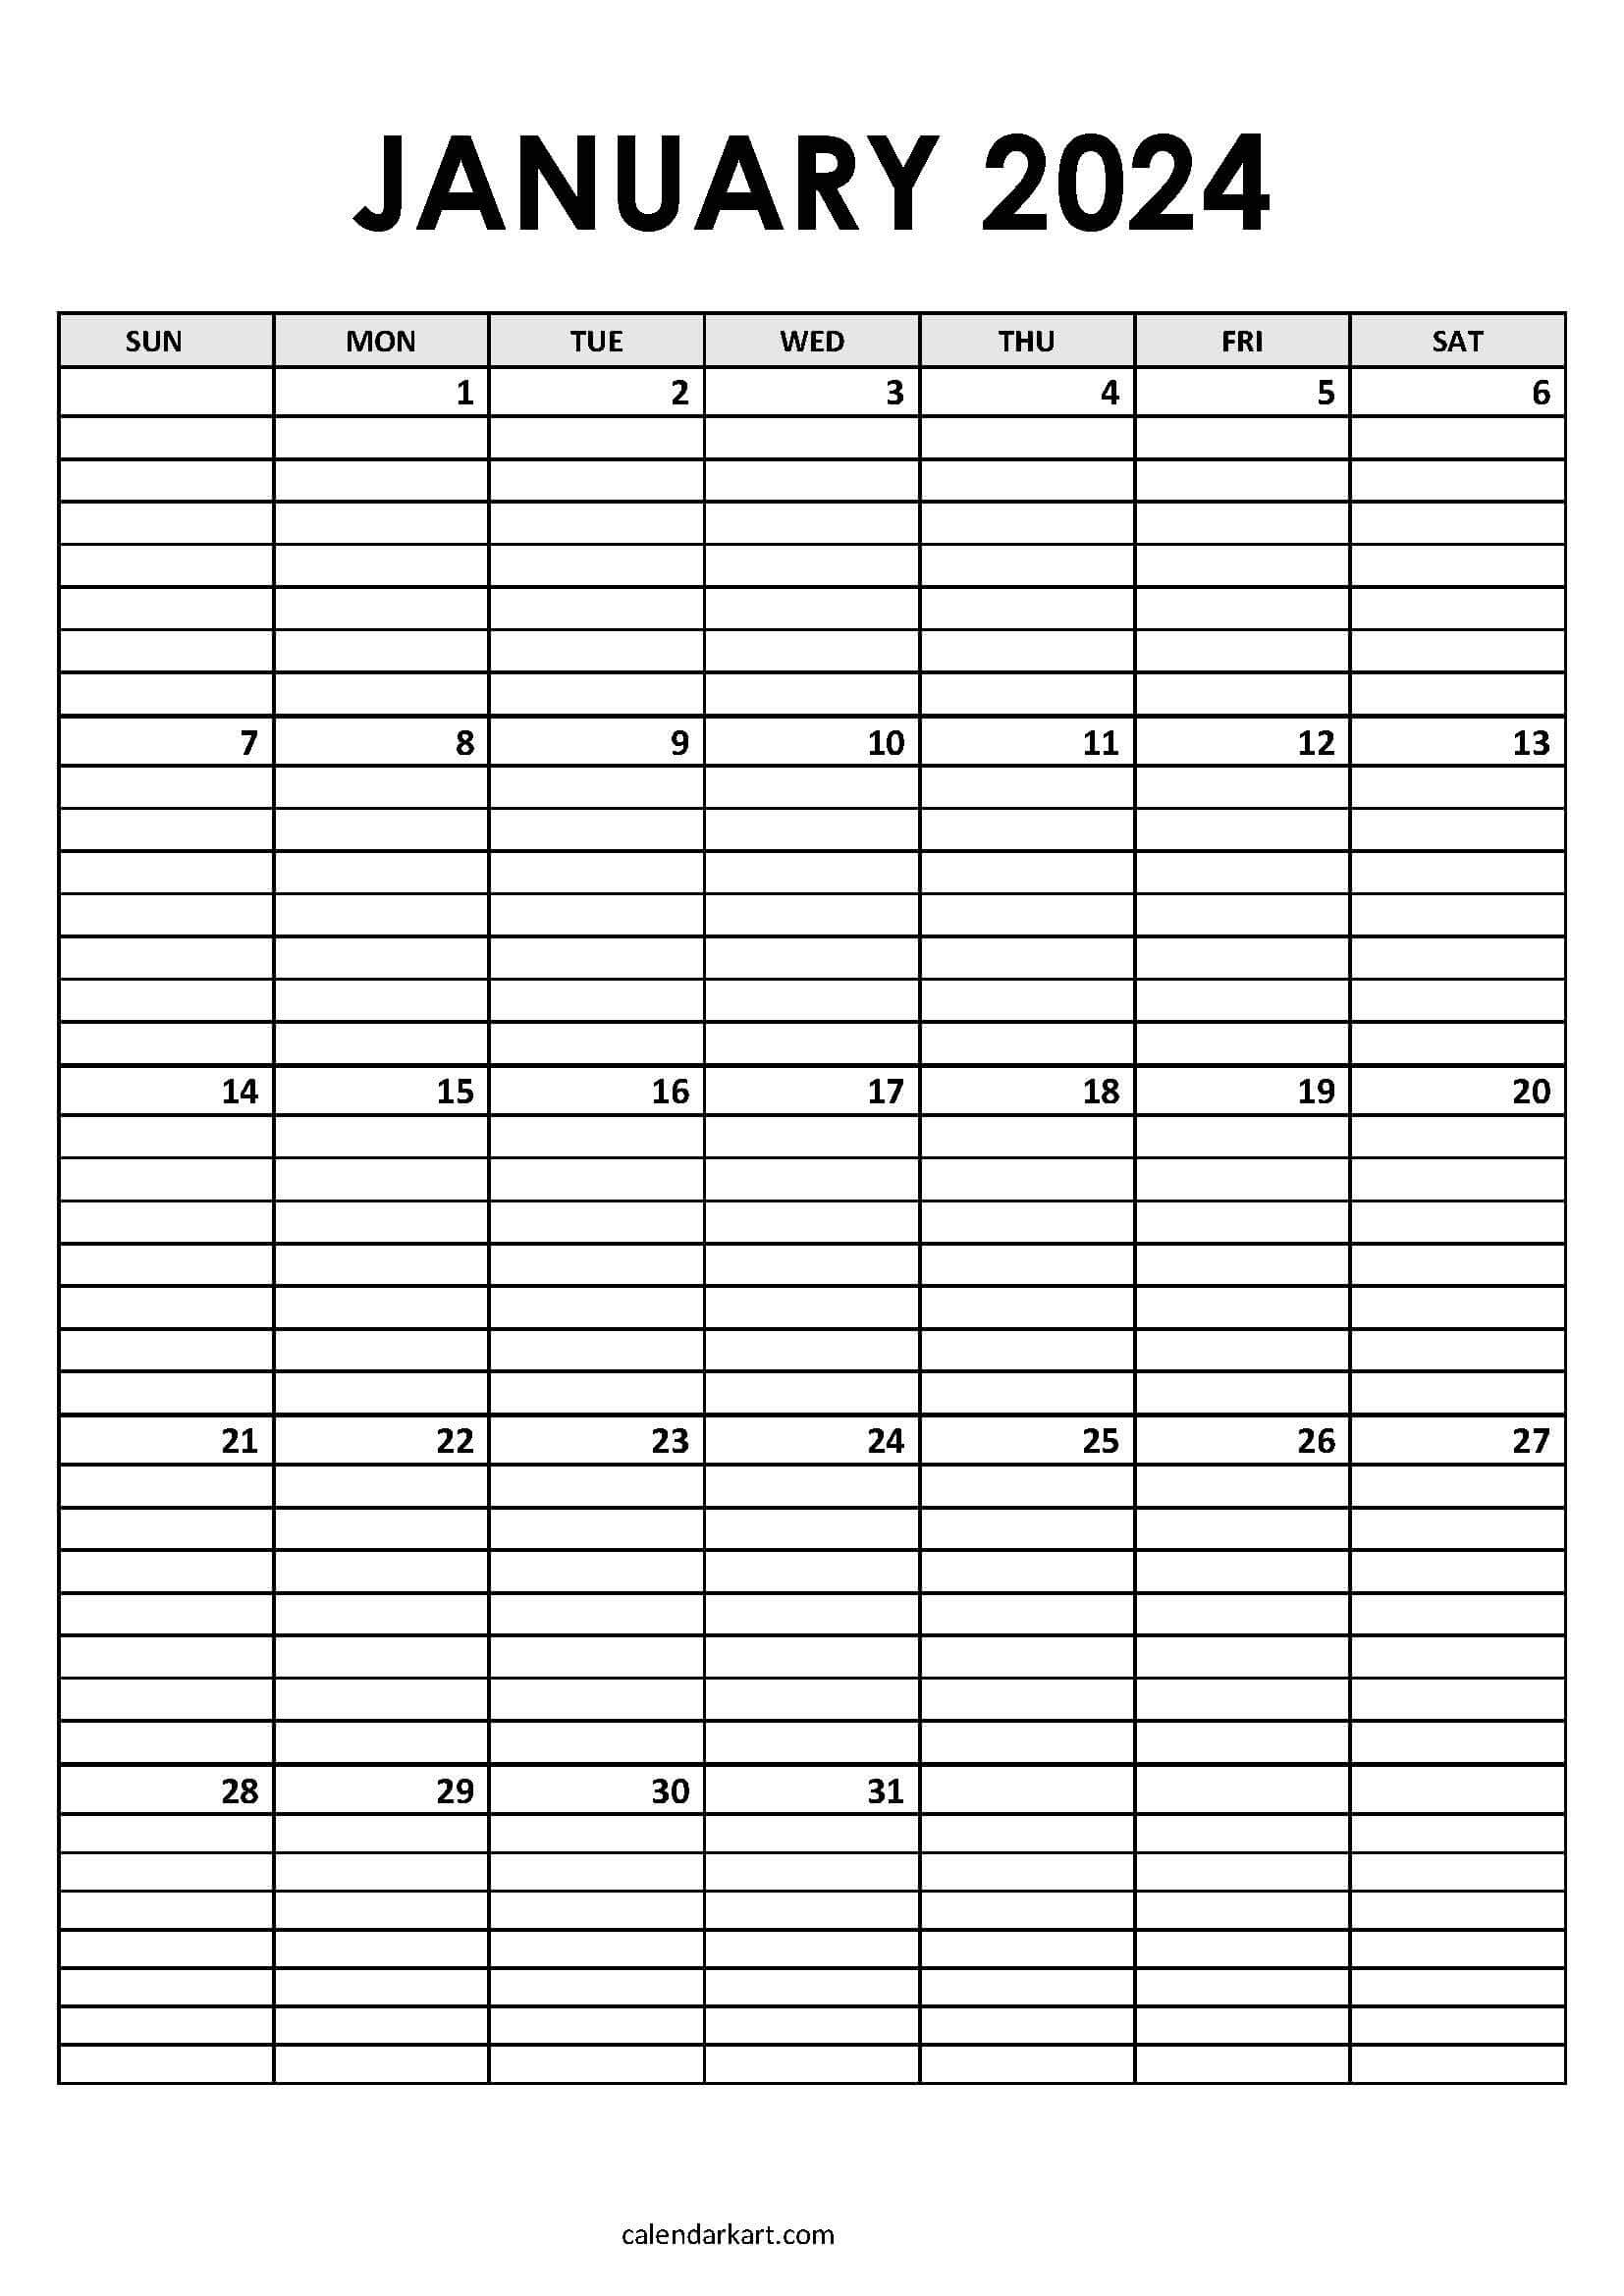 Free Printable January 2024 Calendars - Calendarkart | Printable 2024 Monthly Calendar With Lines